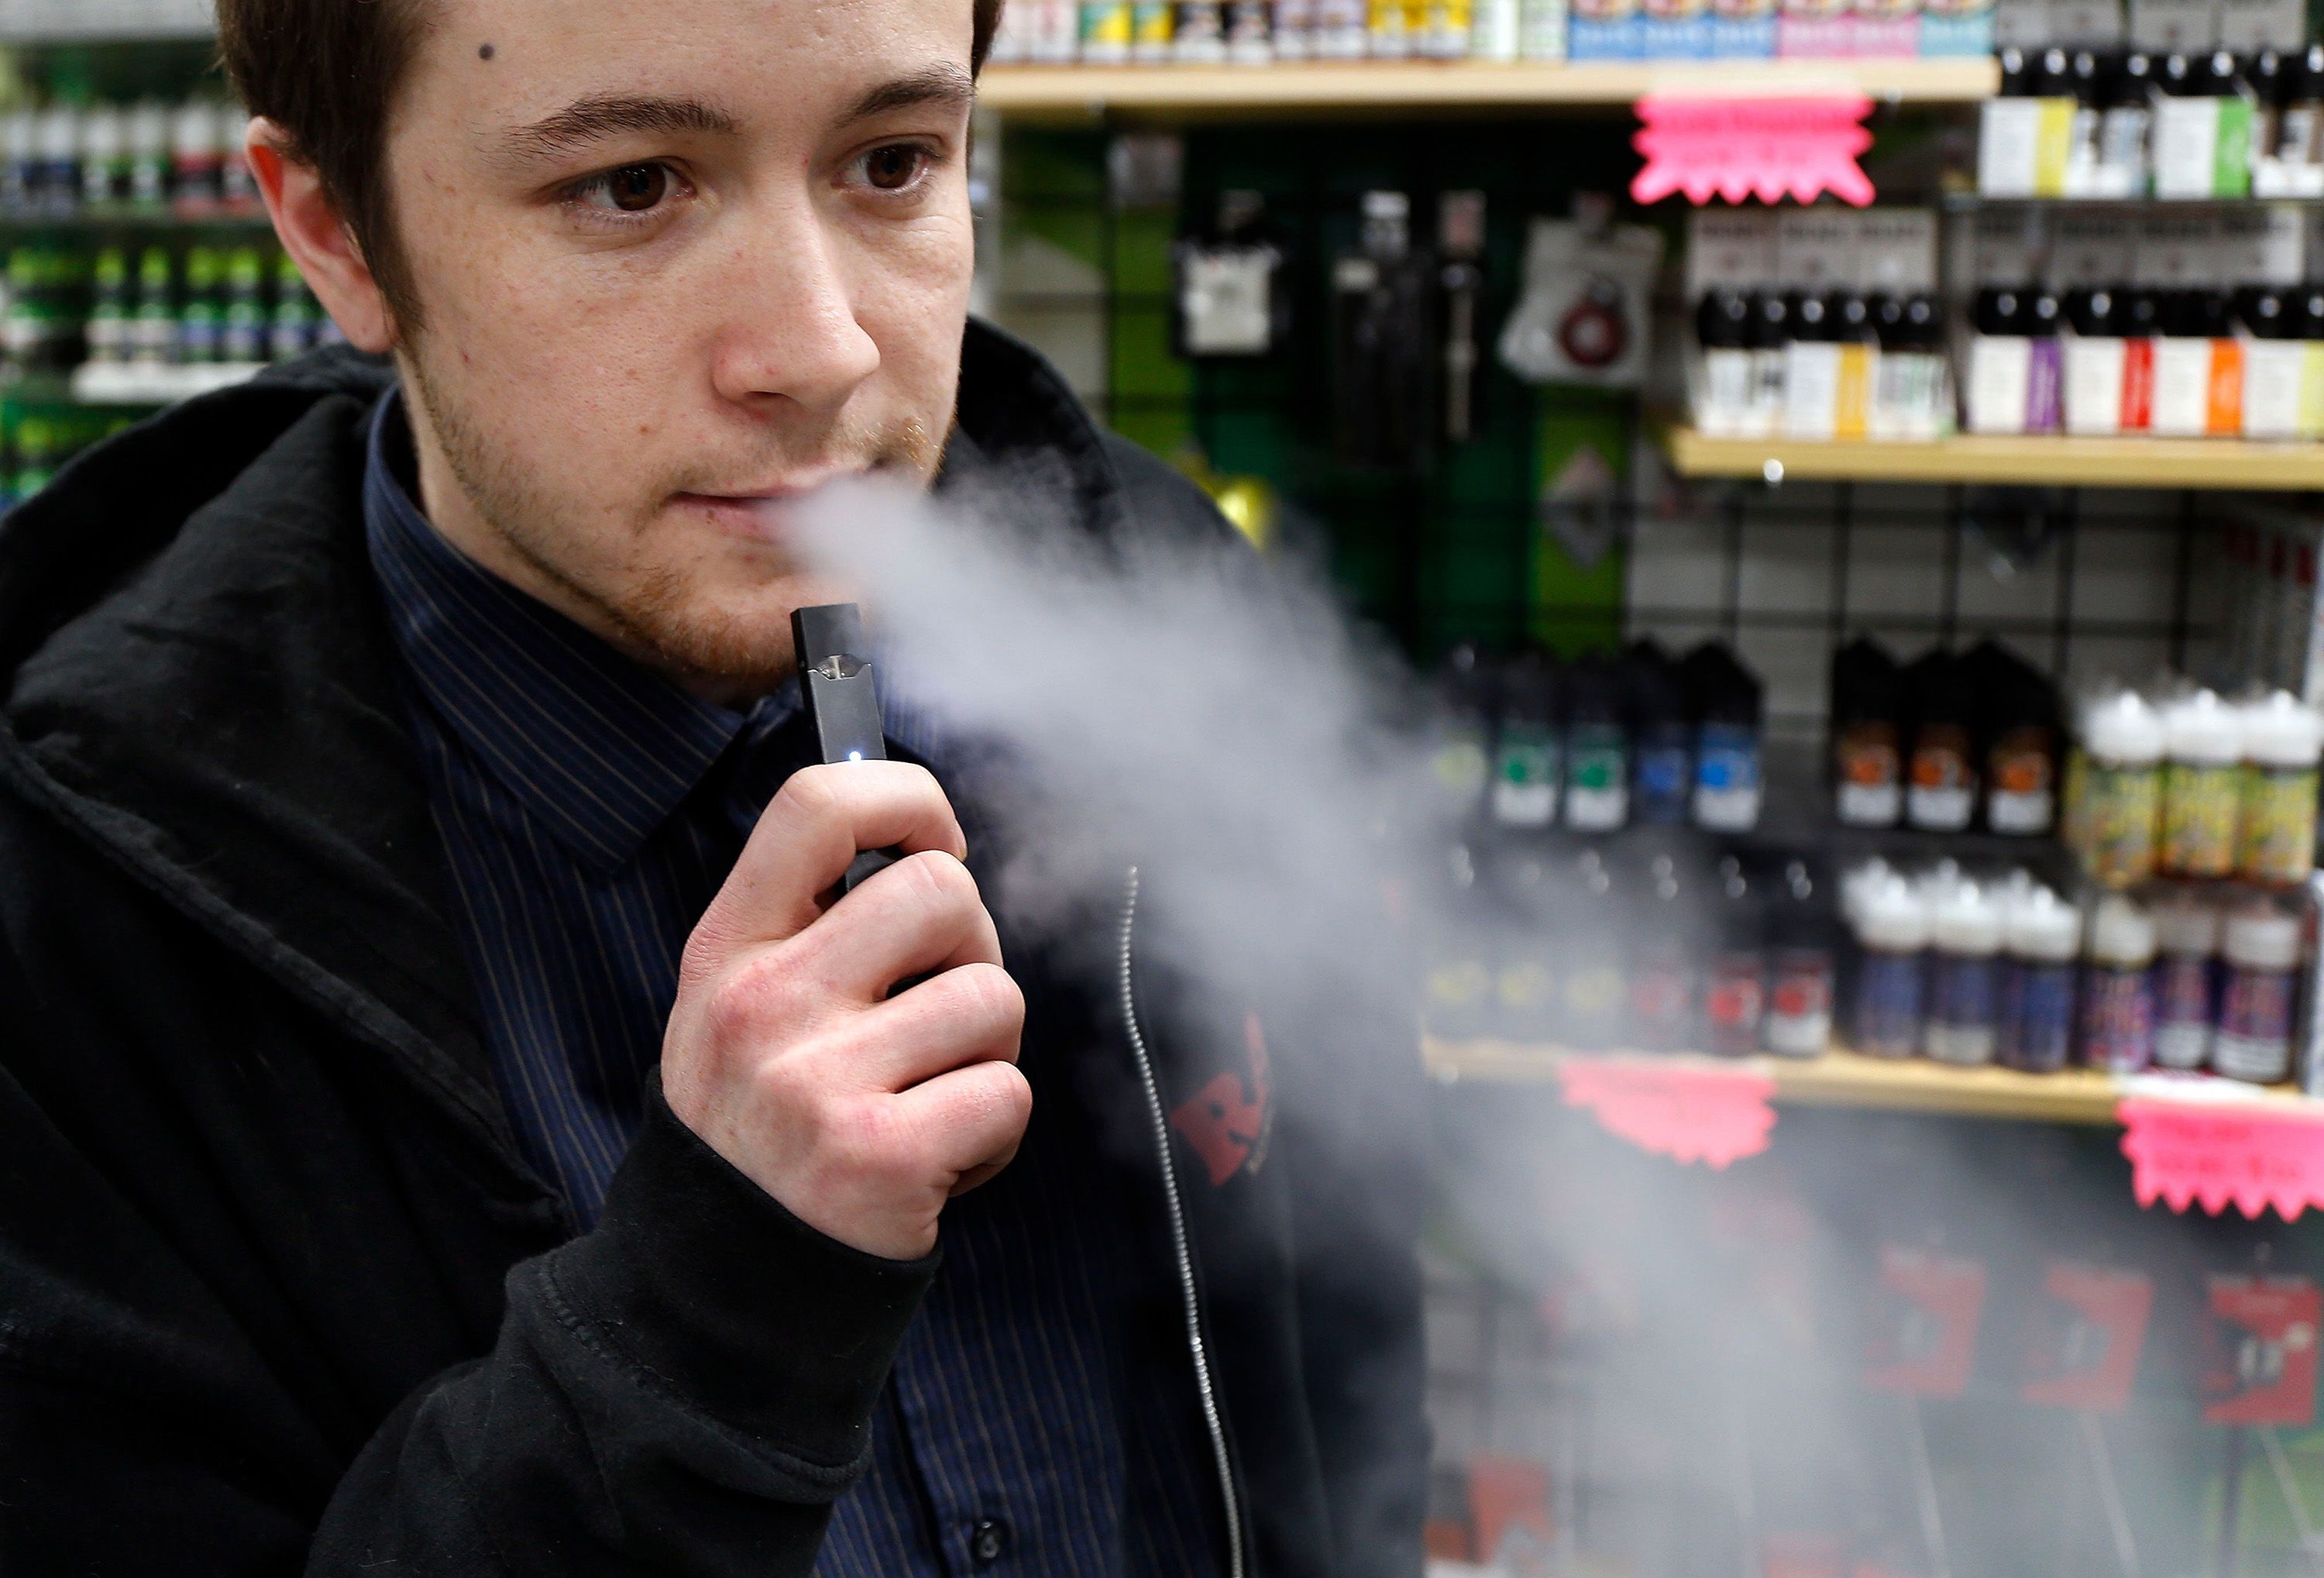 Reynolds blames teen vaping on Juul in fighting FDA e-cigarette rules